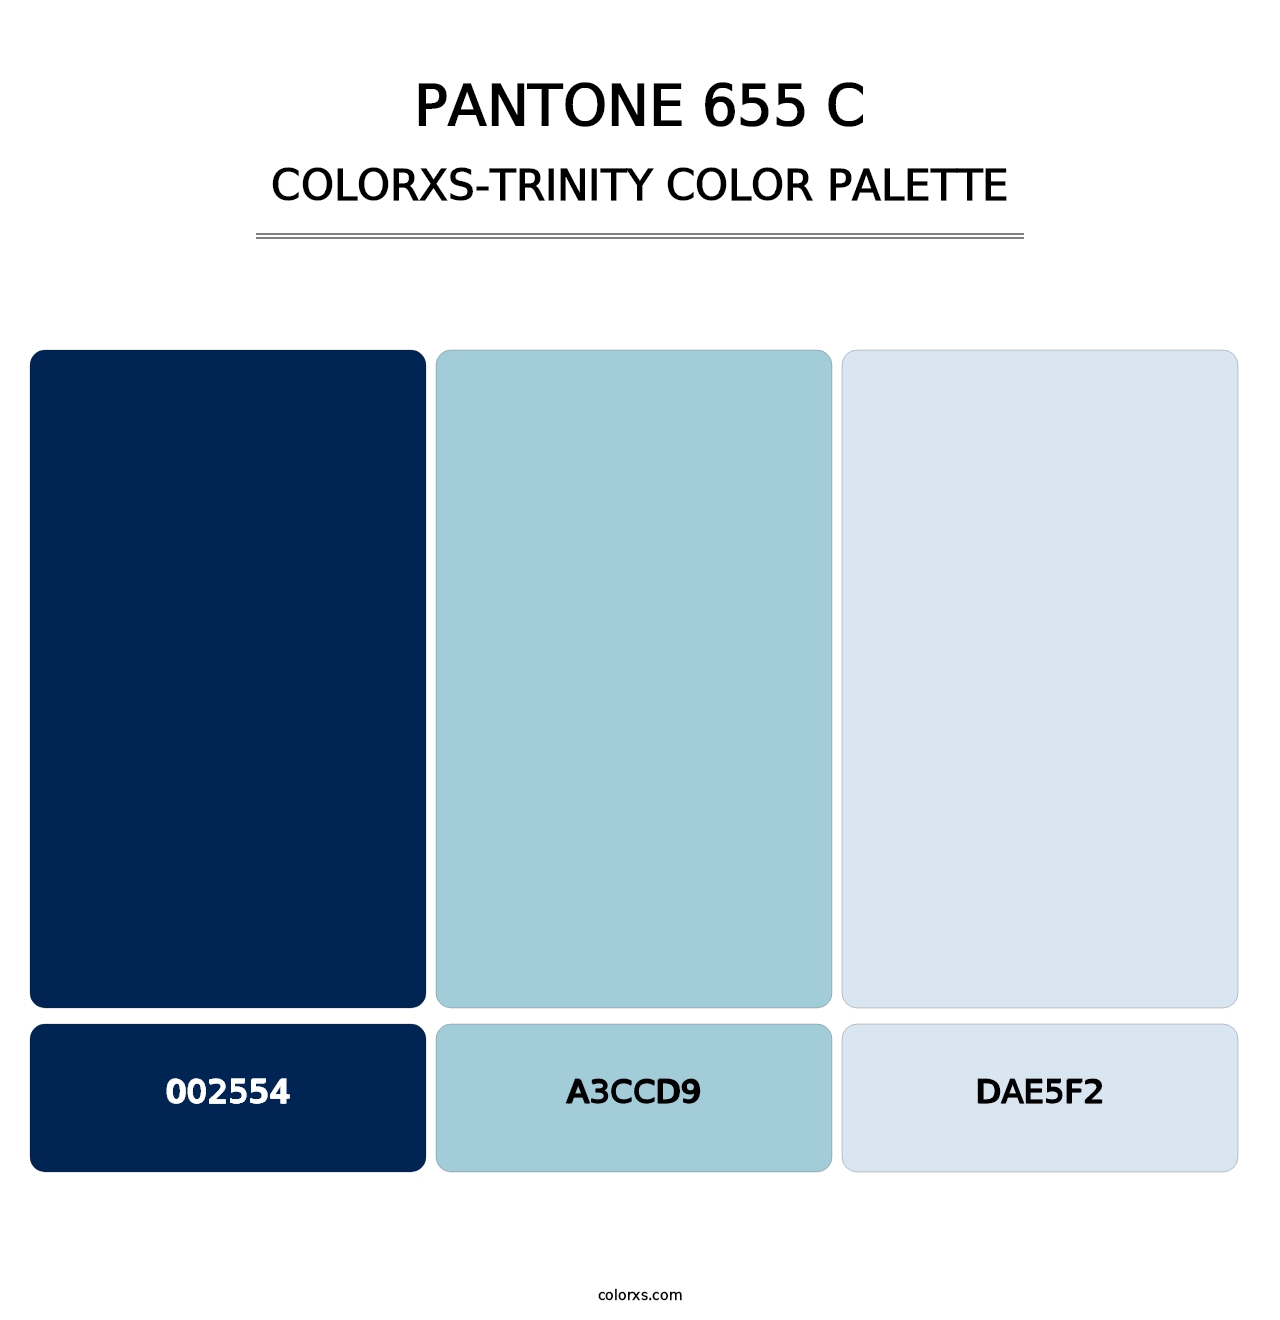 PANTONE 655 C - Colorxs Trinity Palette